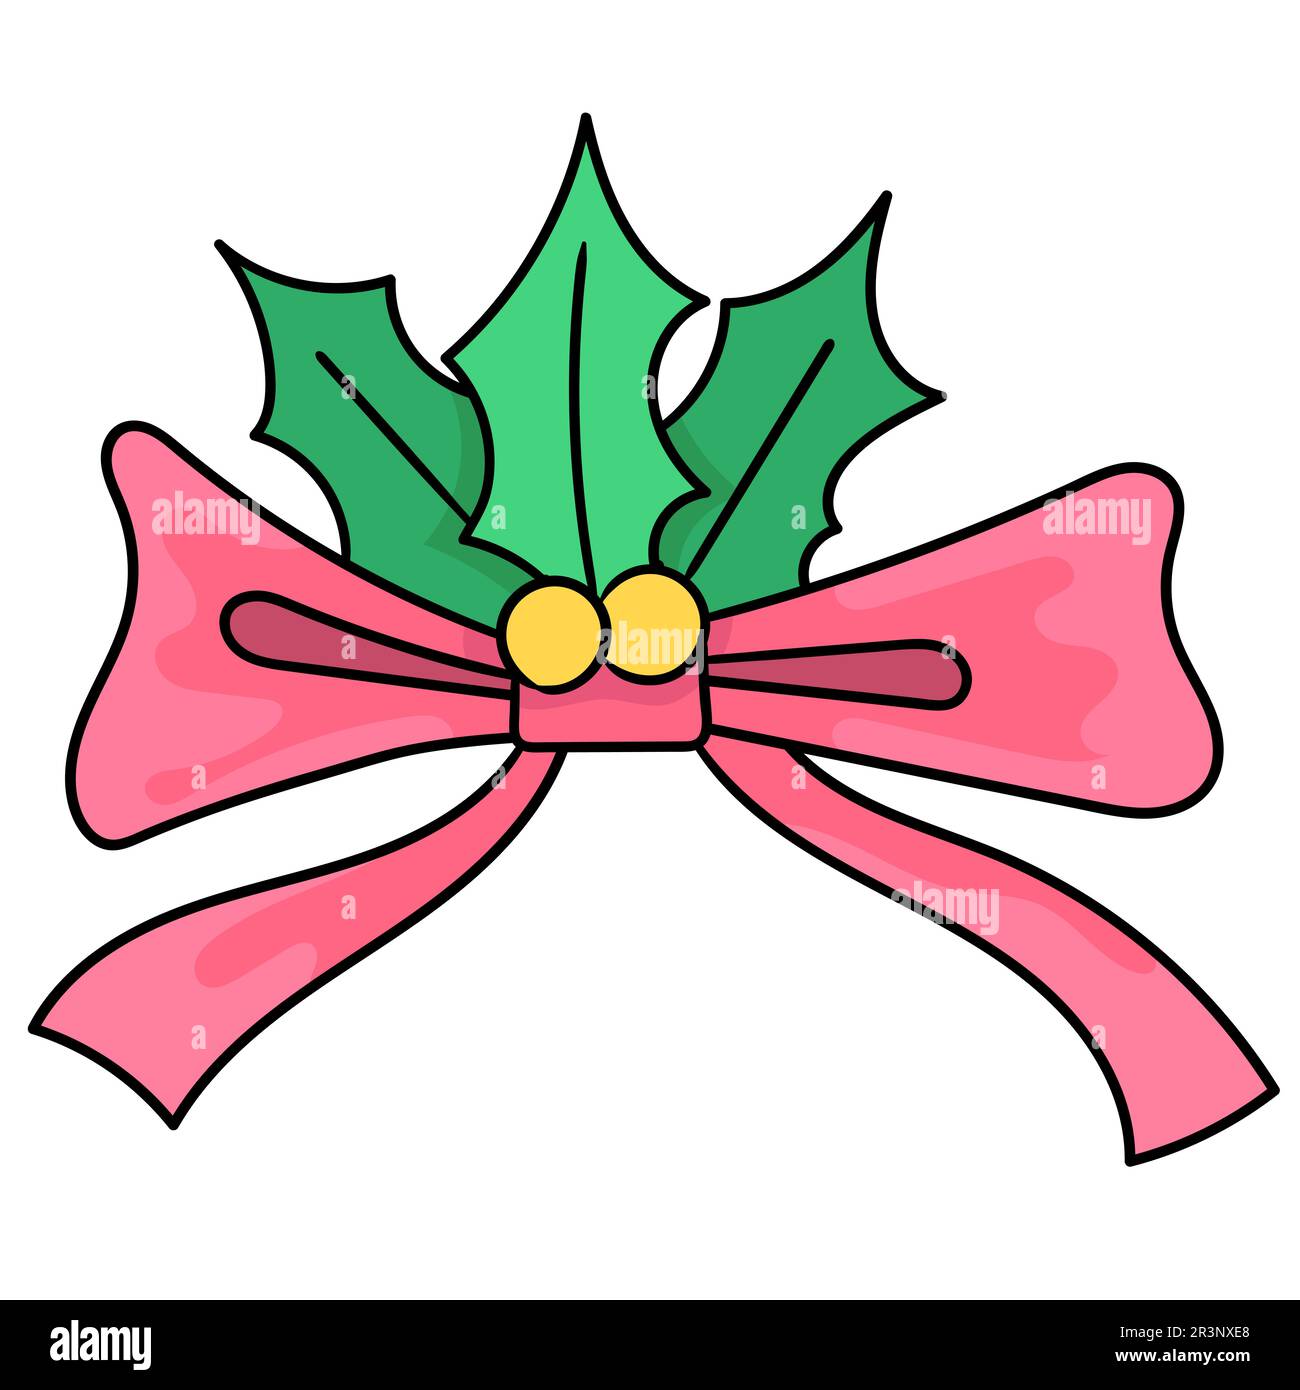 Pinkfarbenes weihnachtsband. Bild des doodle-Symbols Stockfoto